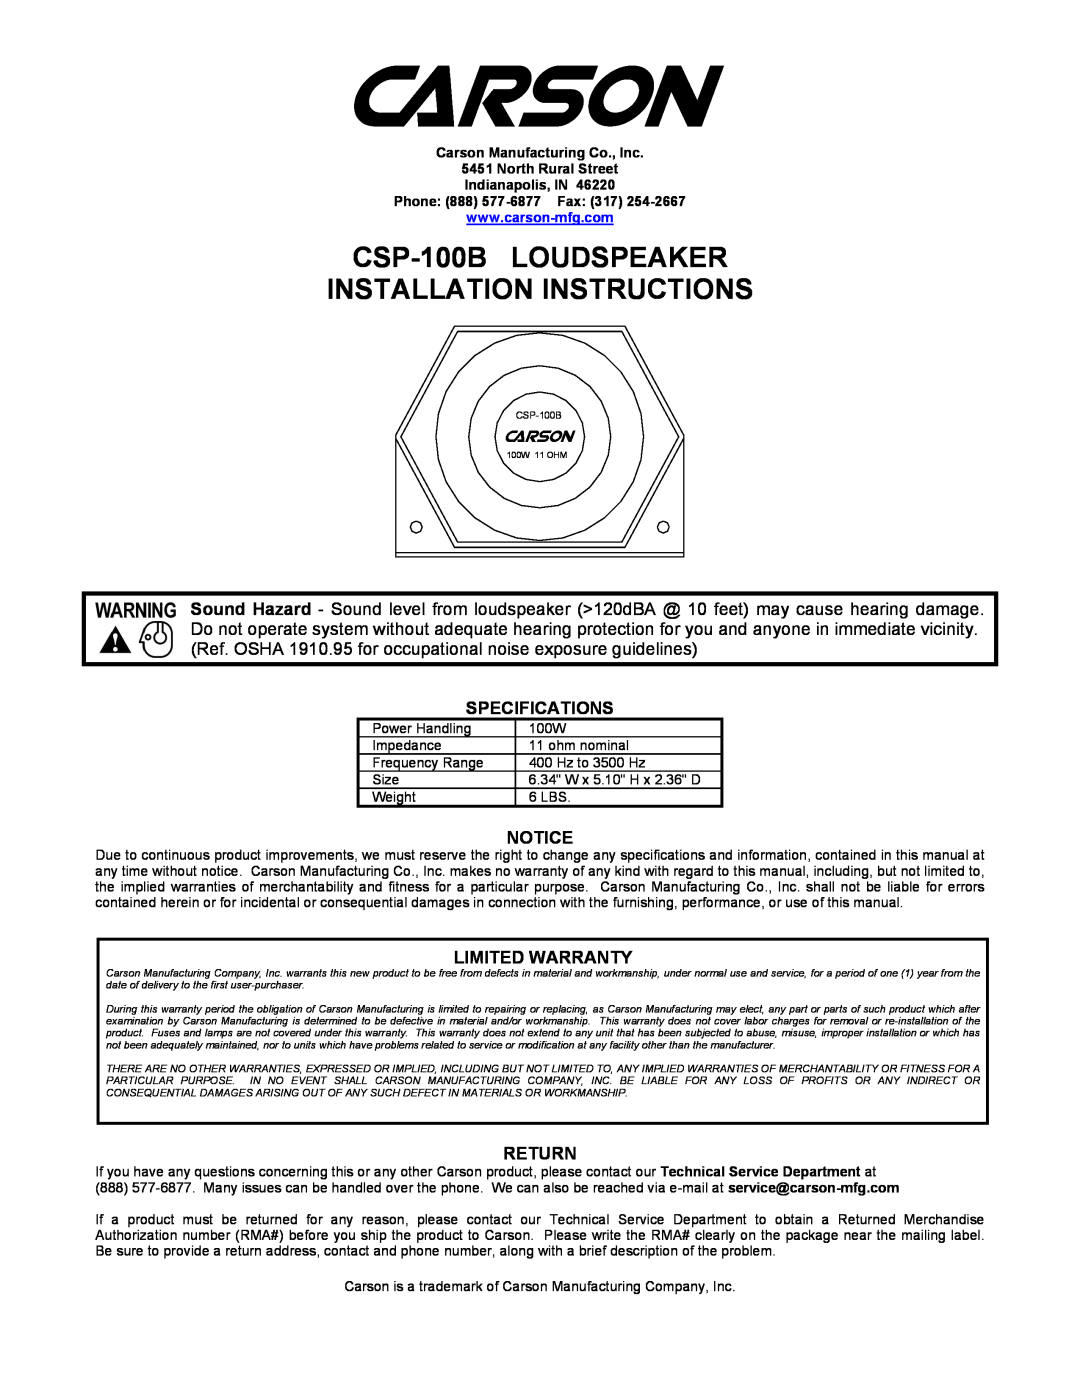 Carson specifications Specifications, Limited Warranty, Return, CSP-100BLOUDSPEAKER INSTALLATION INSTRUCTIONS 